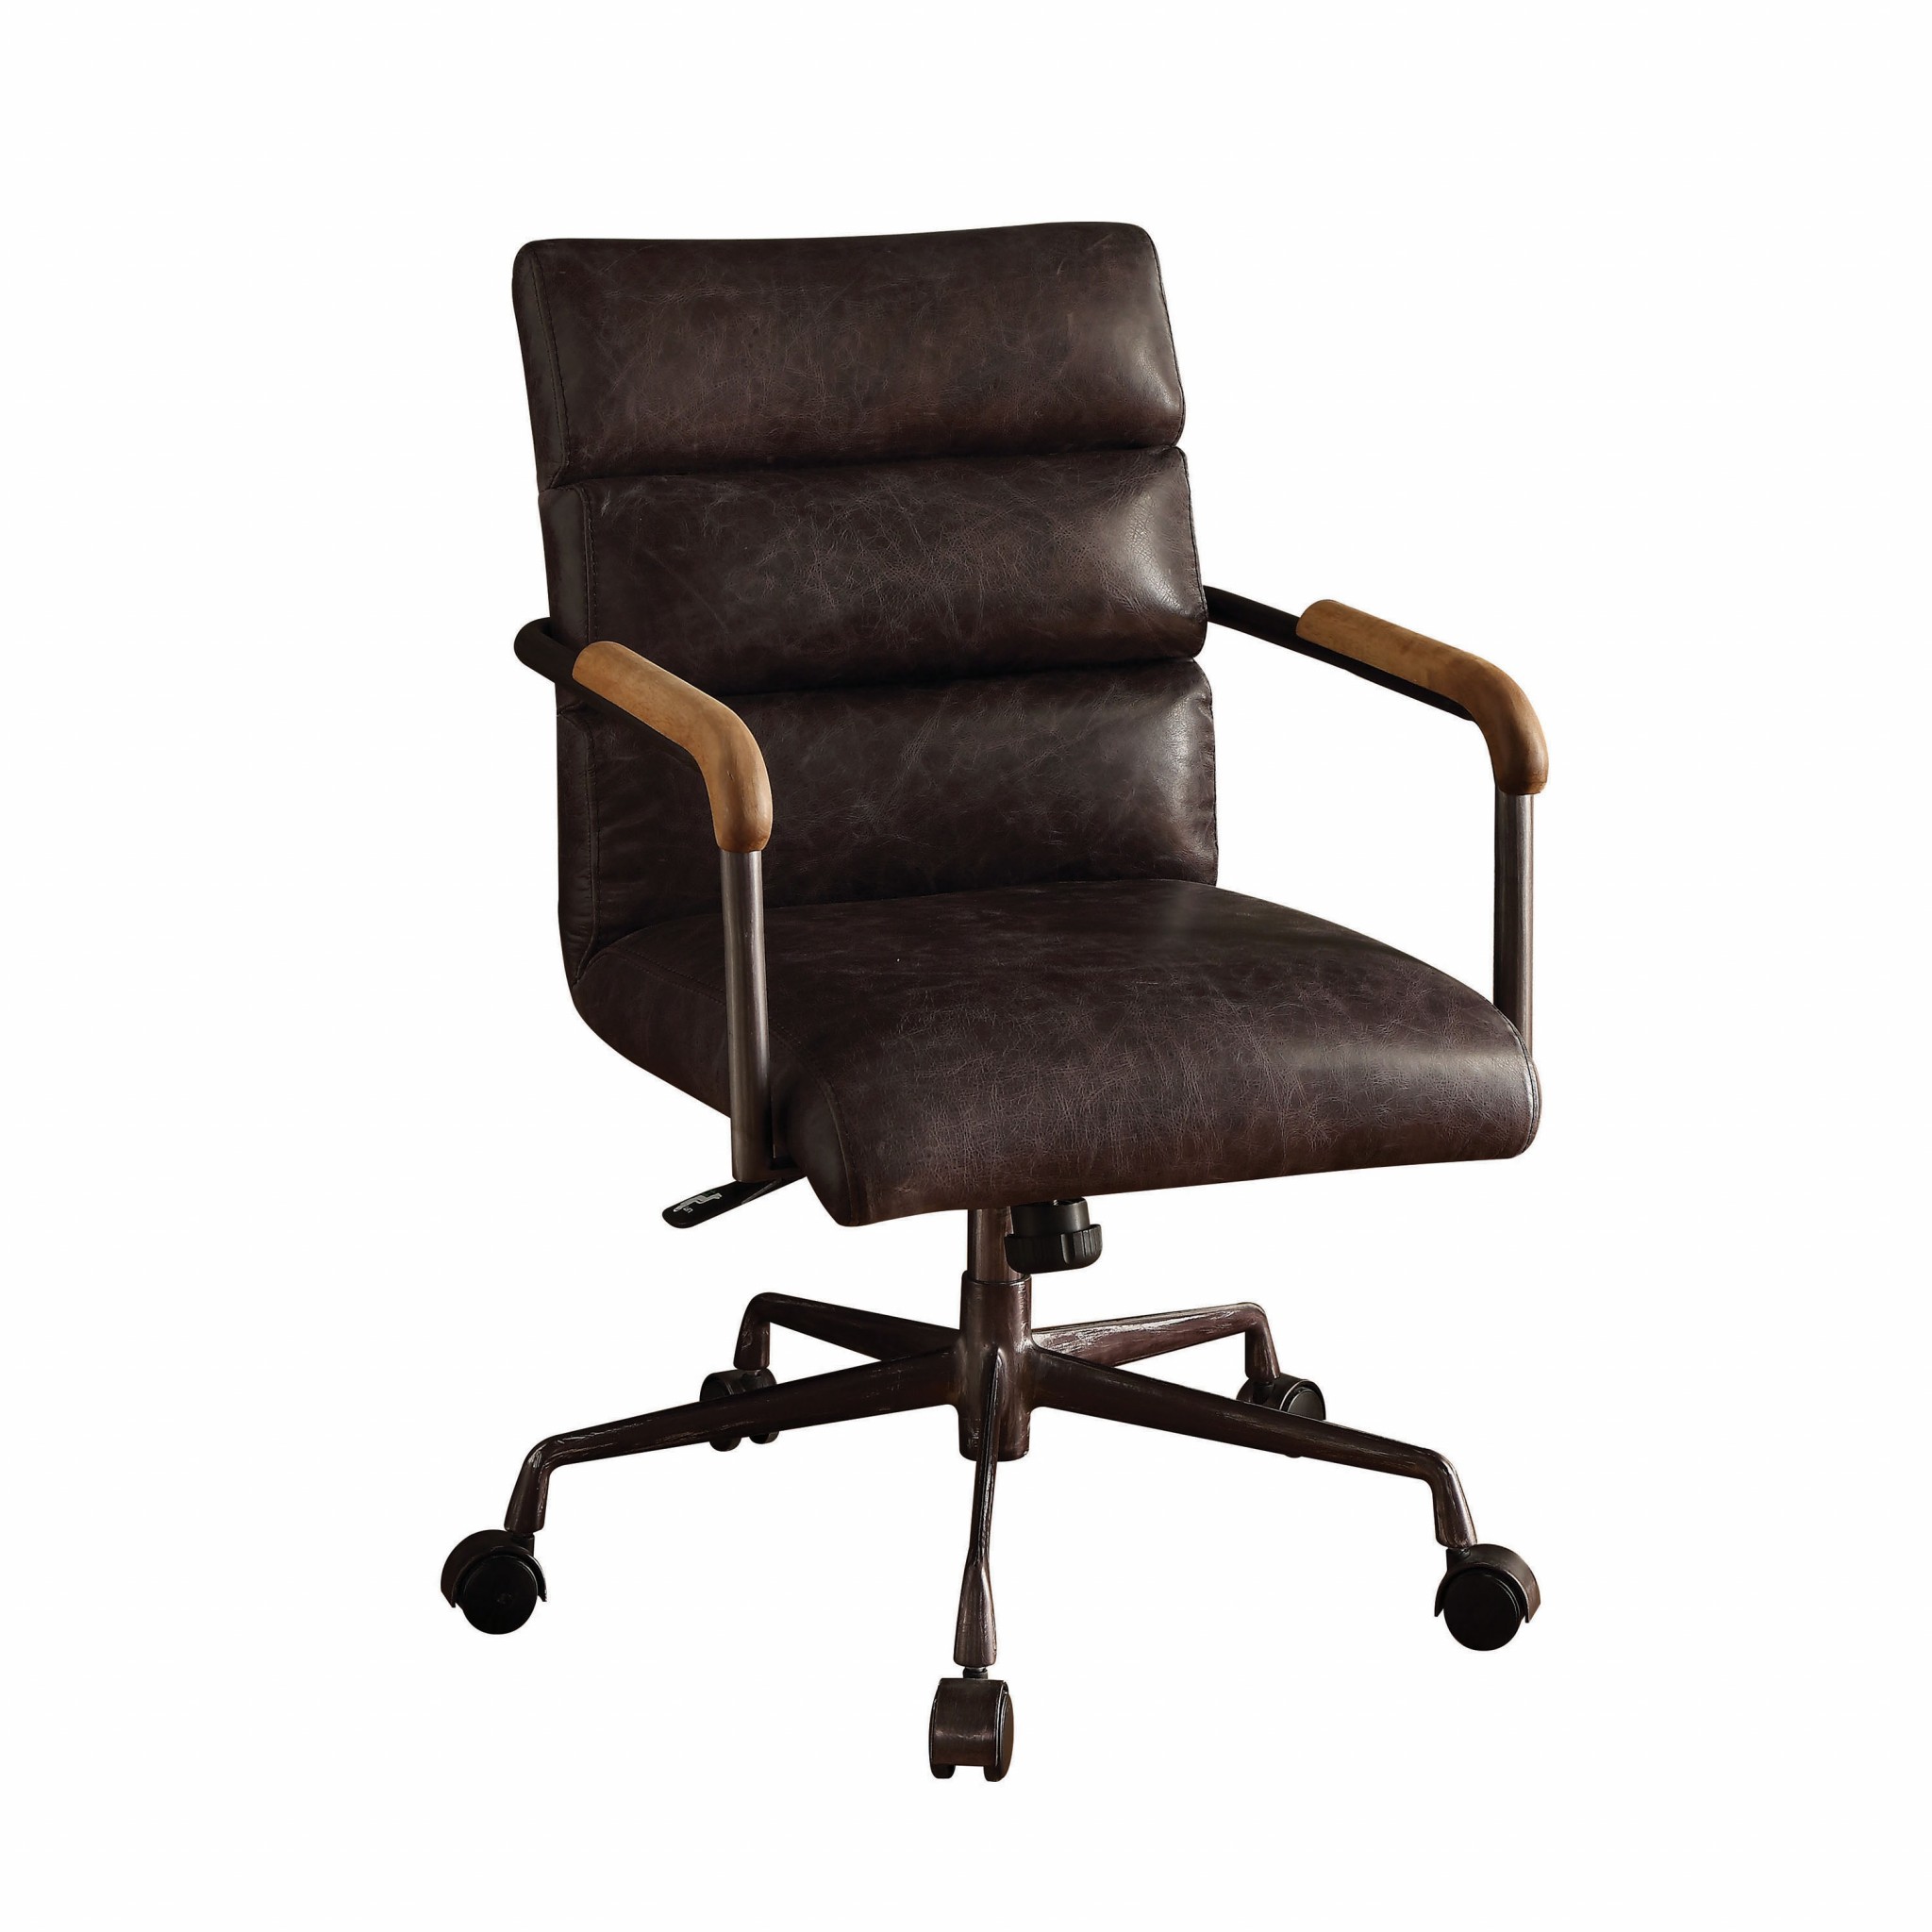 22" X 26" X 35-38" Antique Ebony Top Grain Leather Office Chair